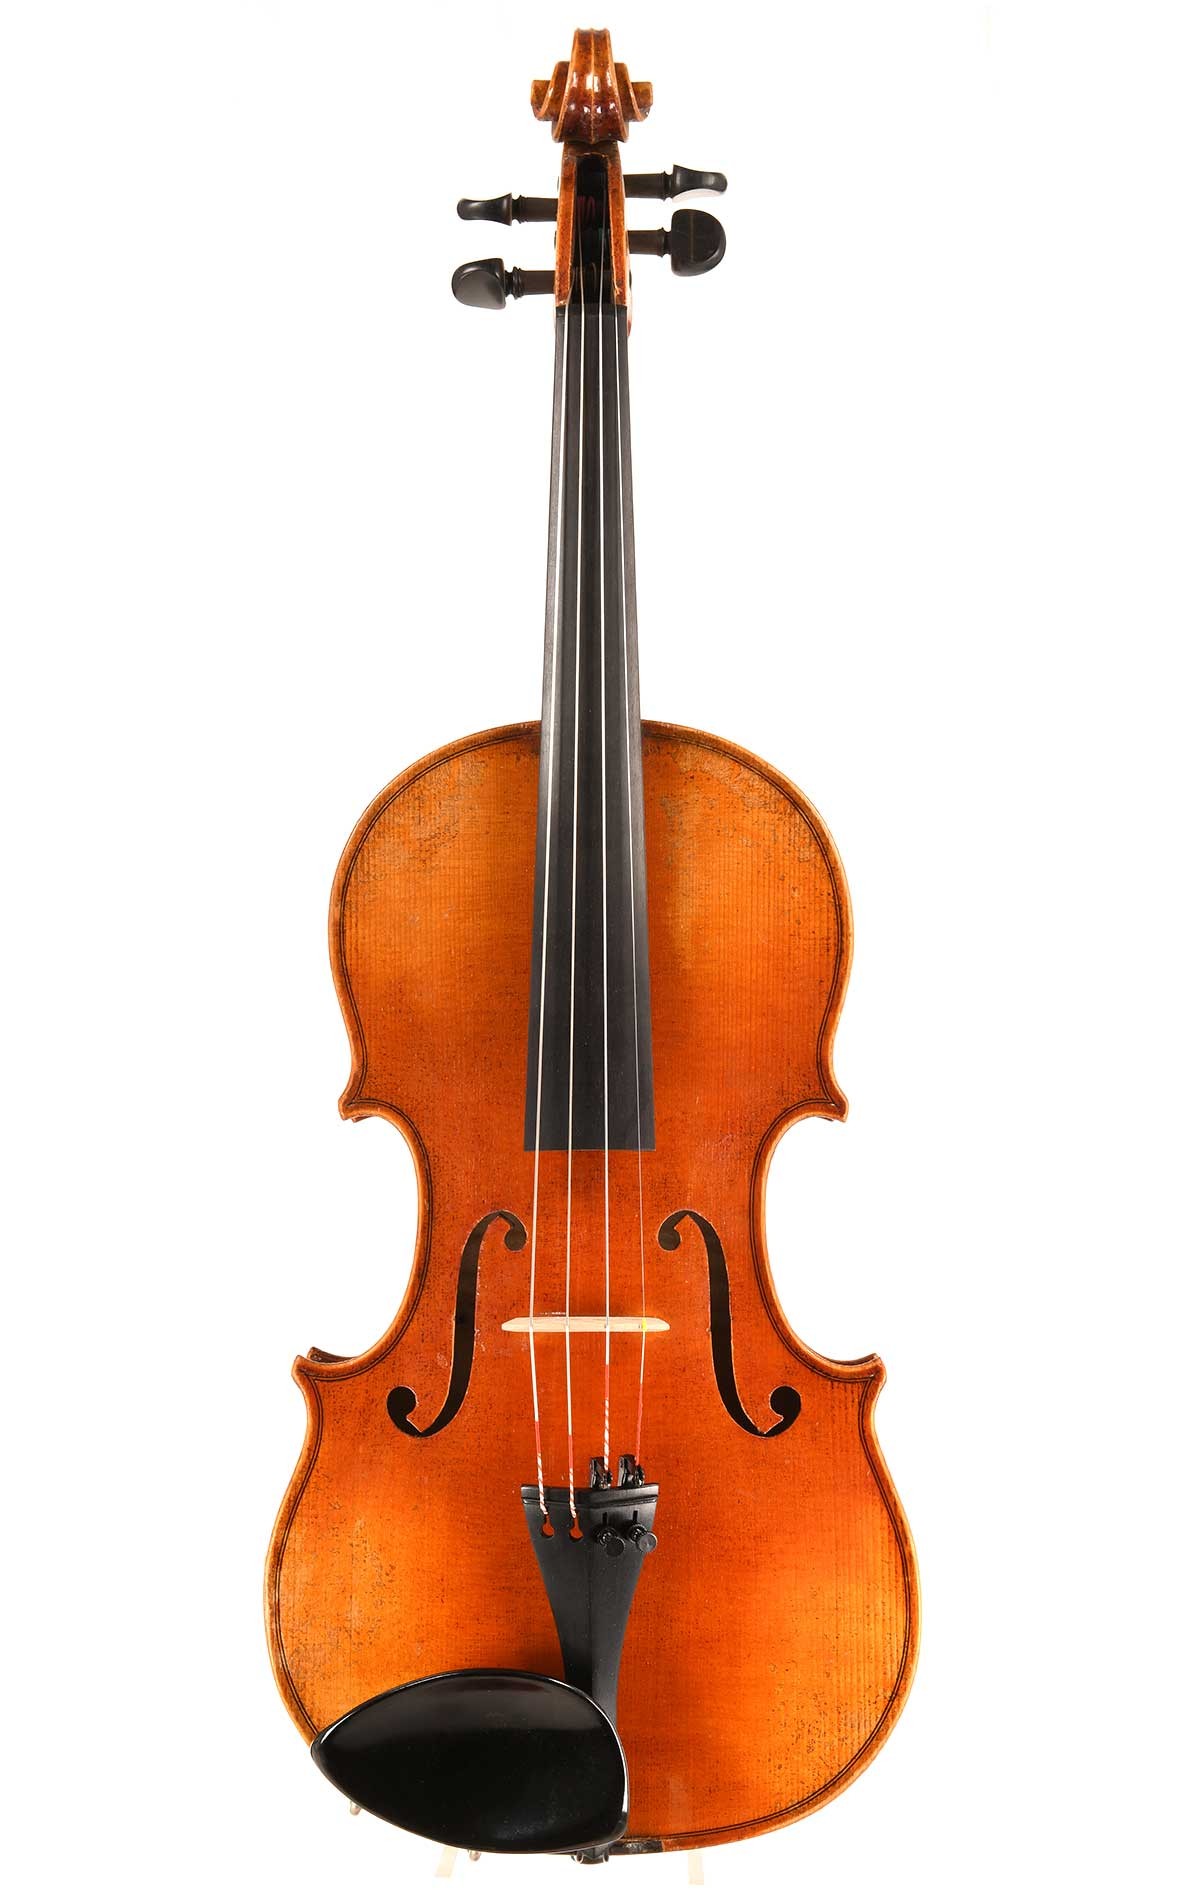 来自Bubenreuth的小提琴